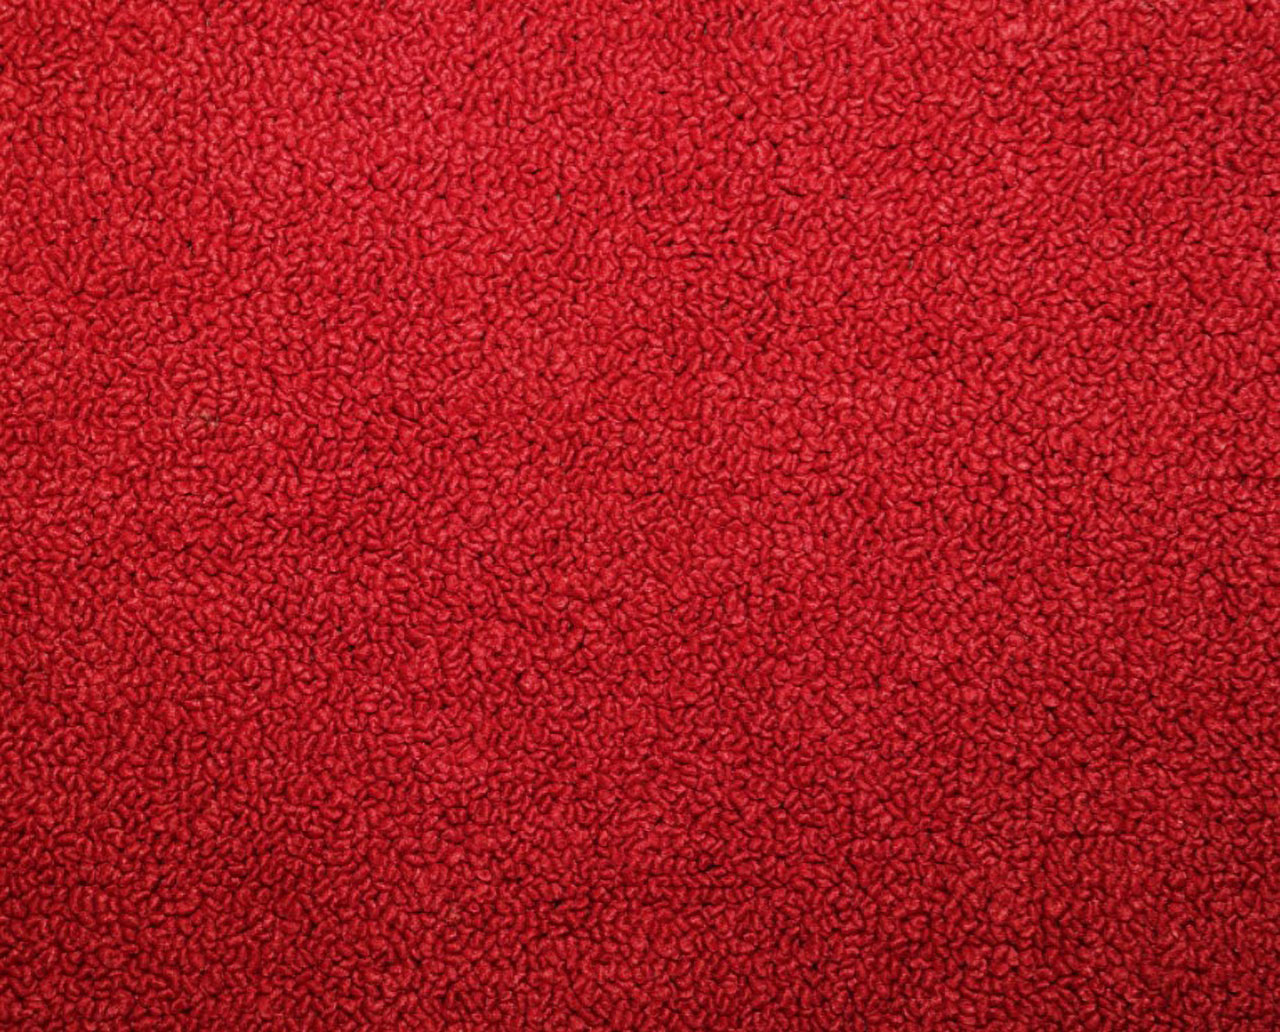 Holden Kingswood HK Kingswood Wagon 12F Goya Red Carpet (Image 1 of 1)